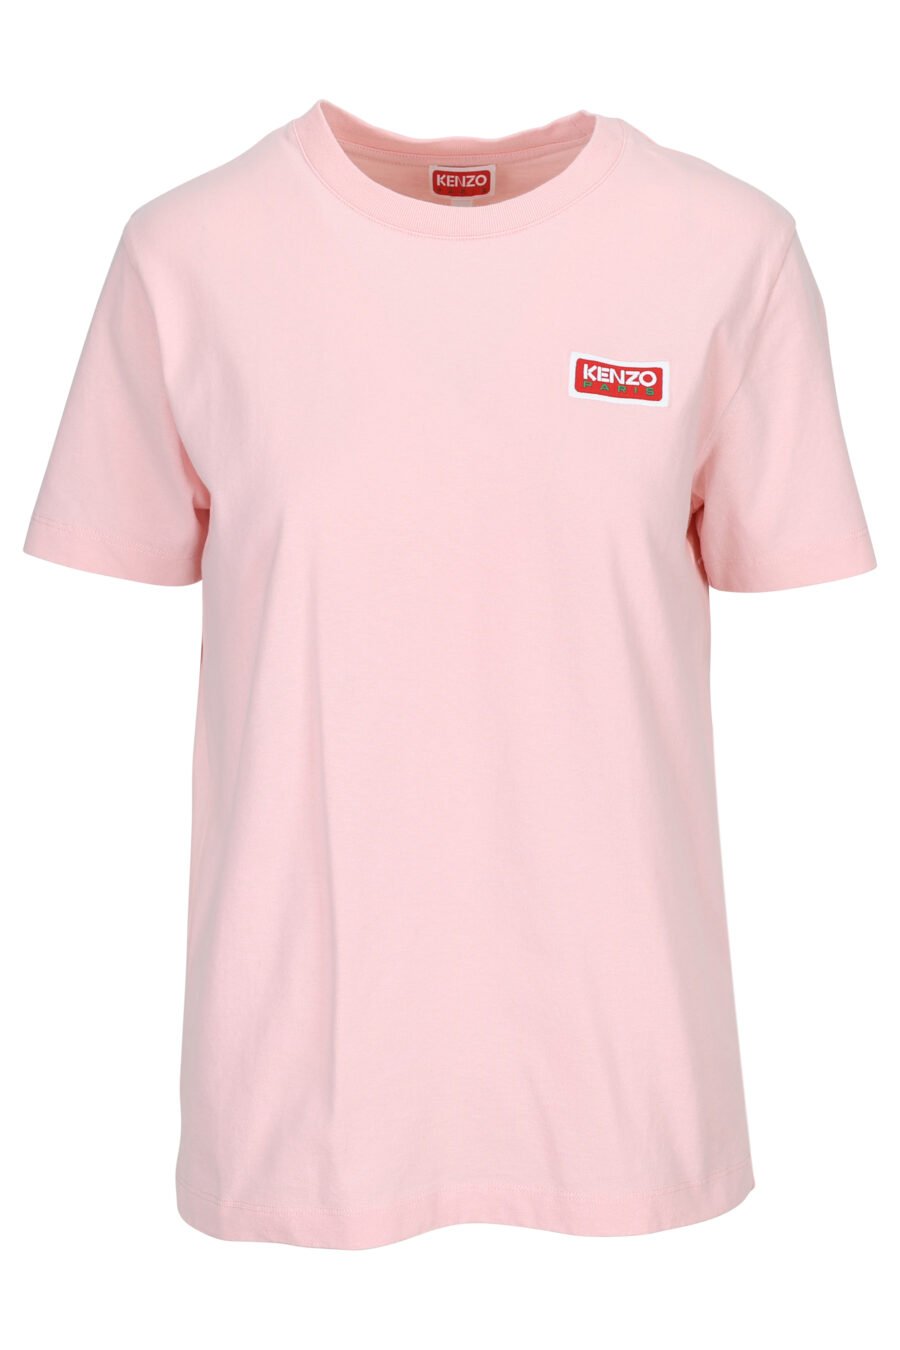 T-shirt oversize rose avec logo "kenzo paris" - 3612230520752